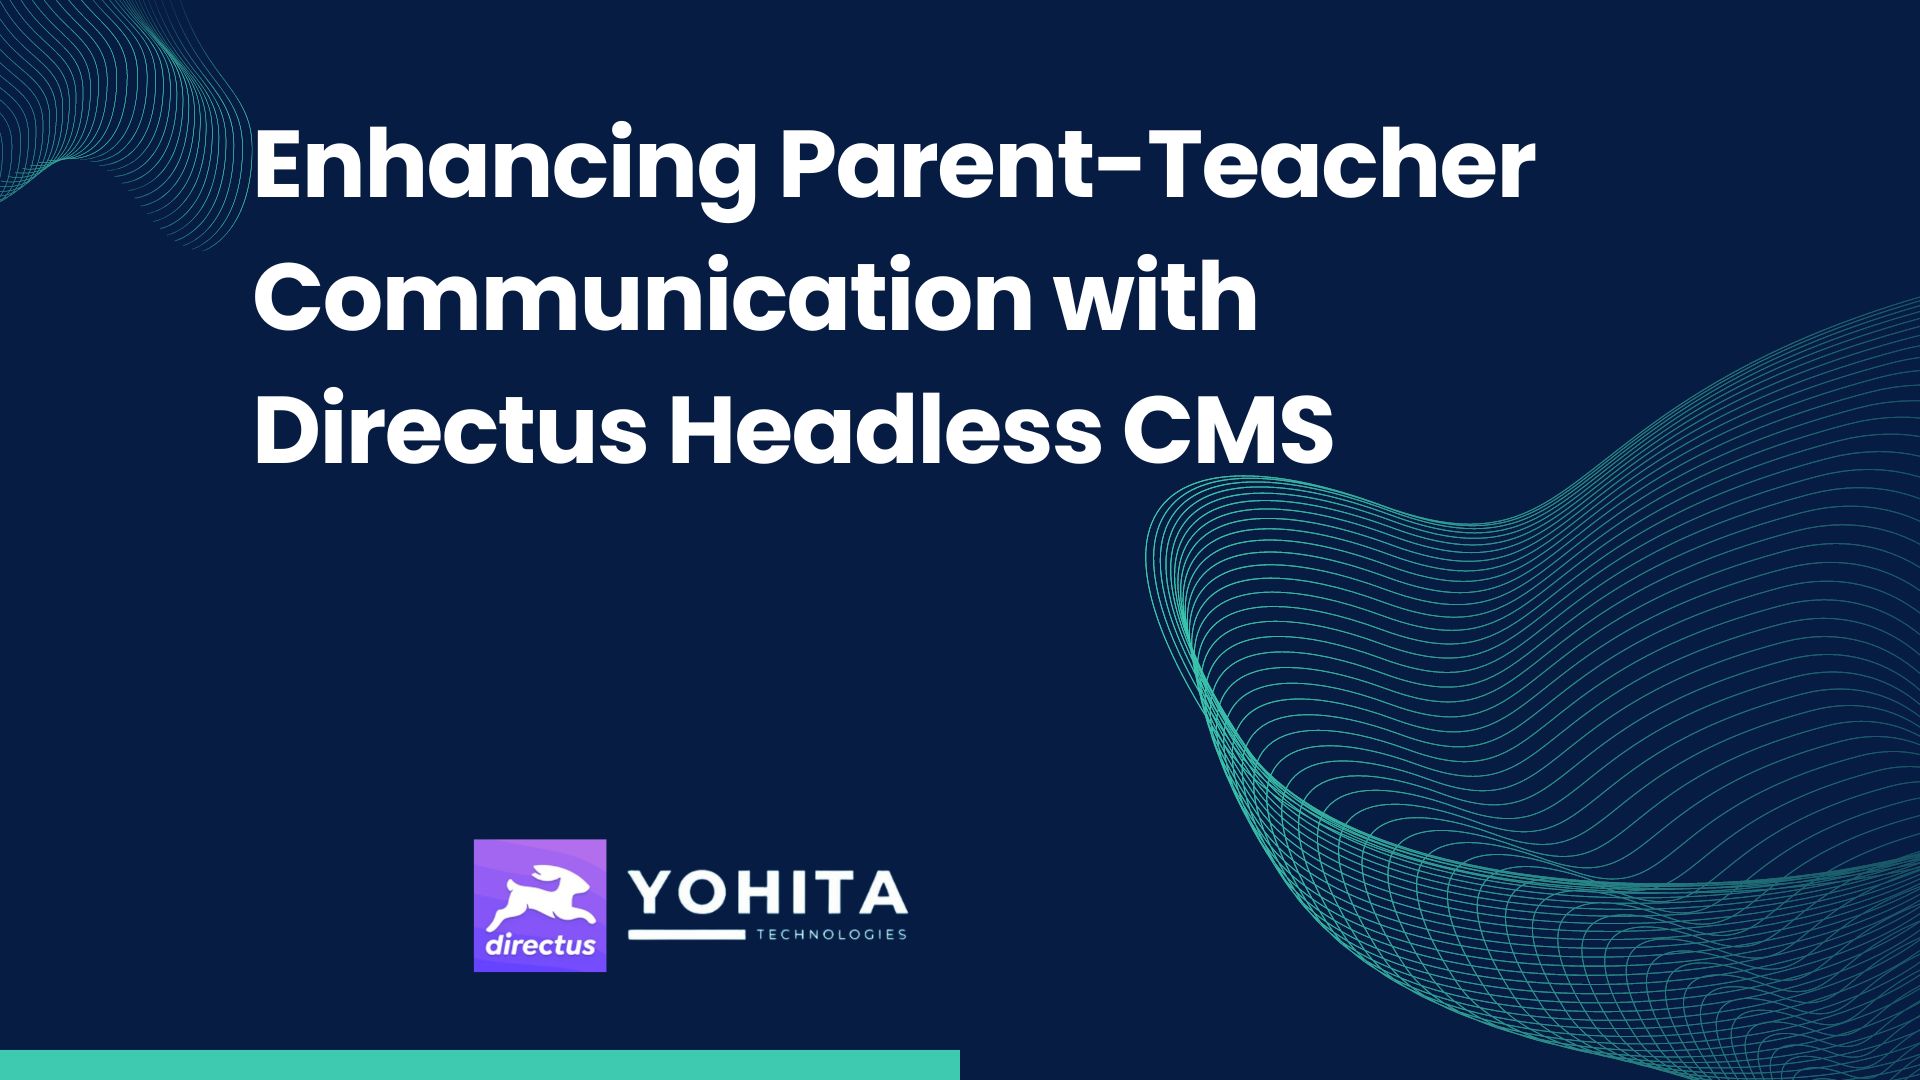 Enhancing Parent-Teacher Communication with Directus Headless CMS